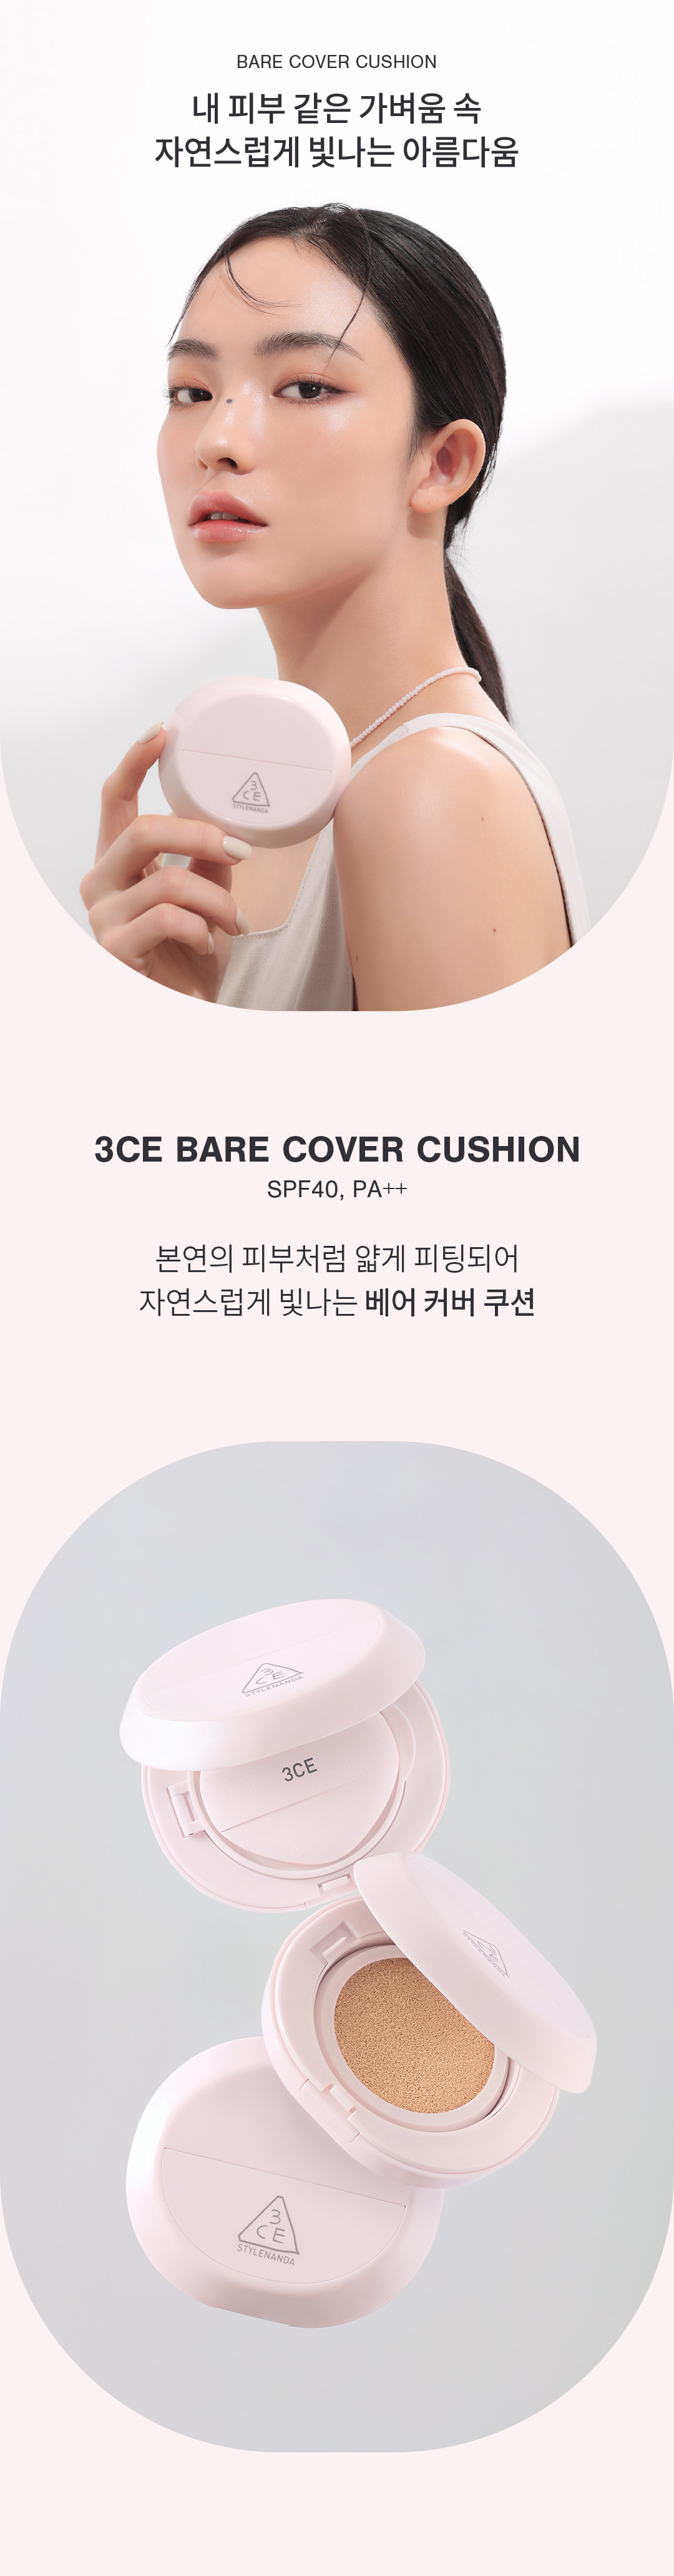 3CE Bare Cover Cushion